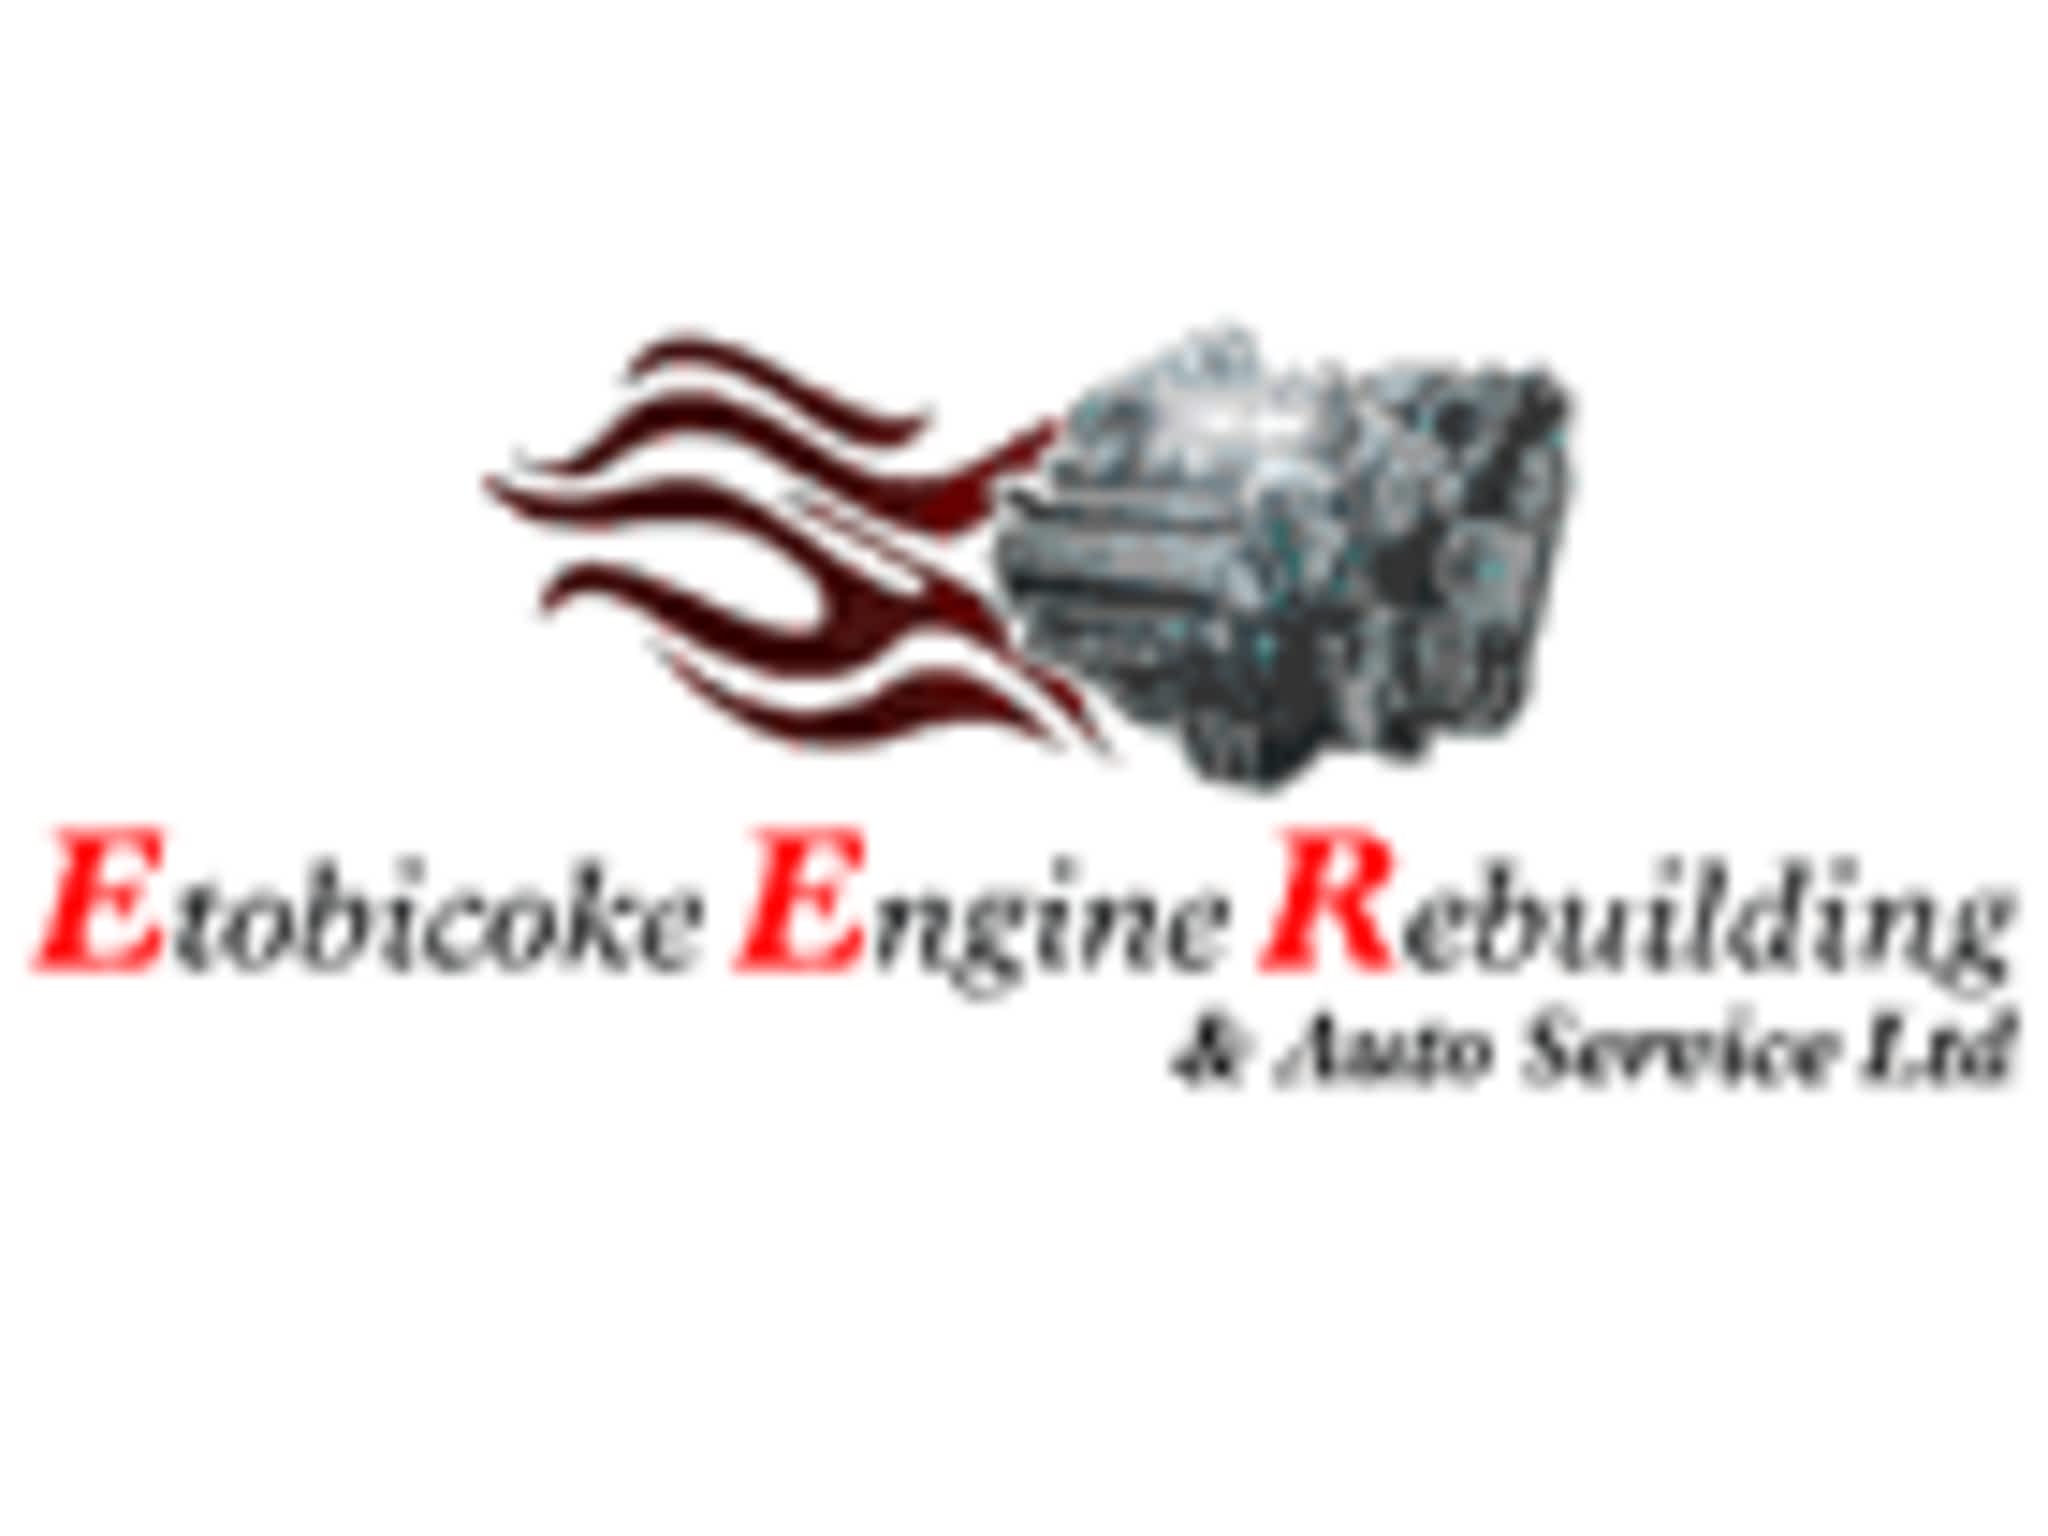 photo Etobicoke Engine Rebuilding & Auto Service Ltd